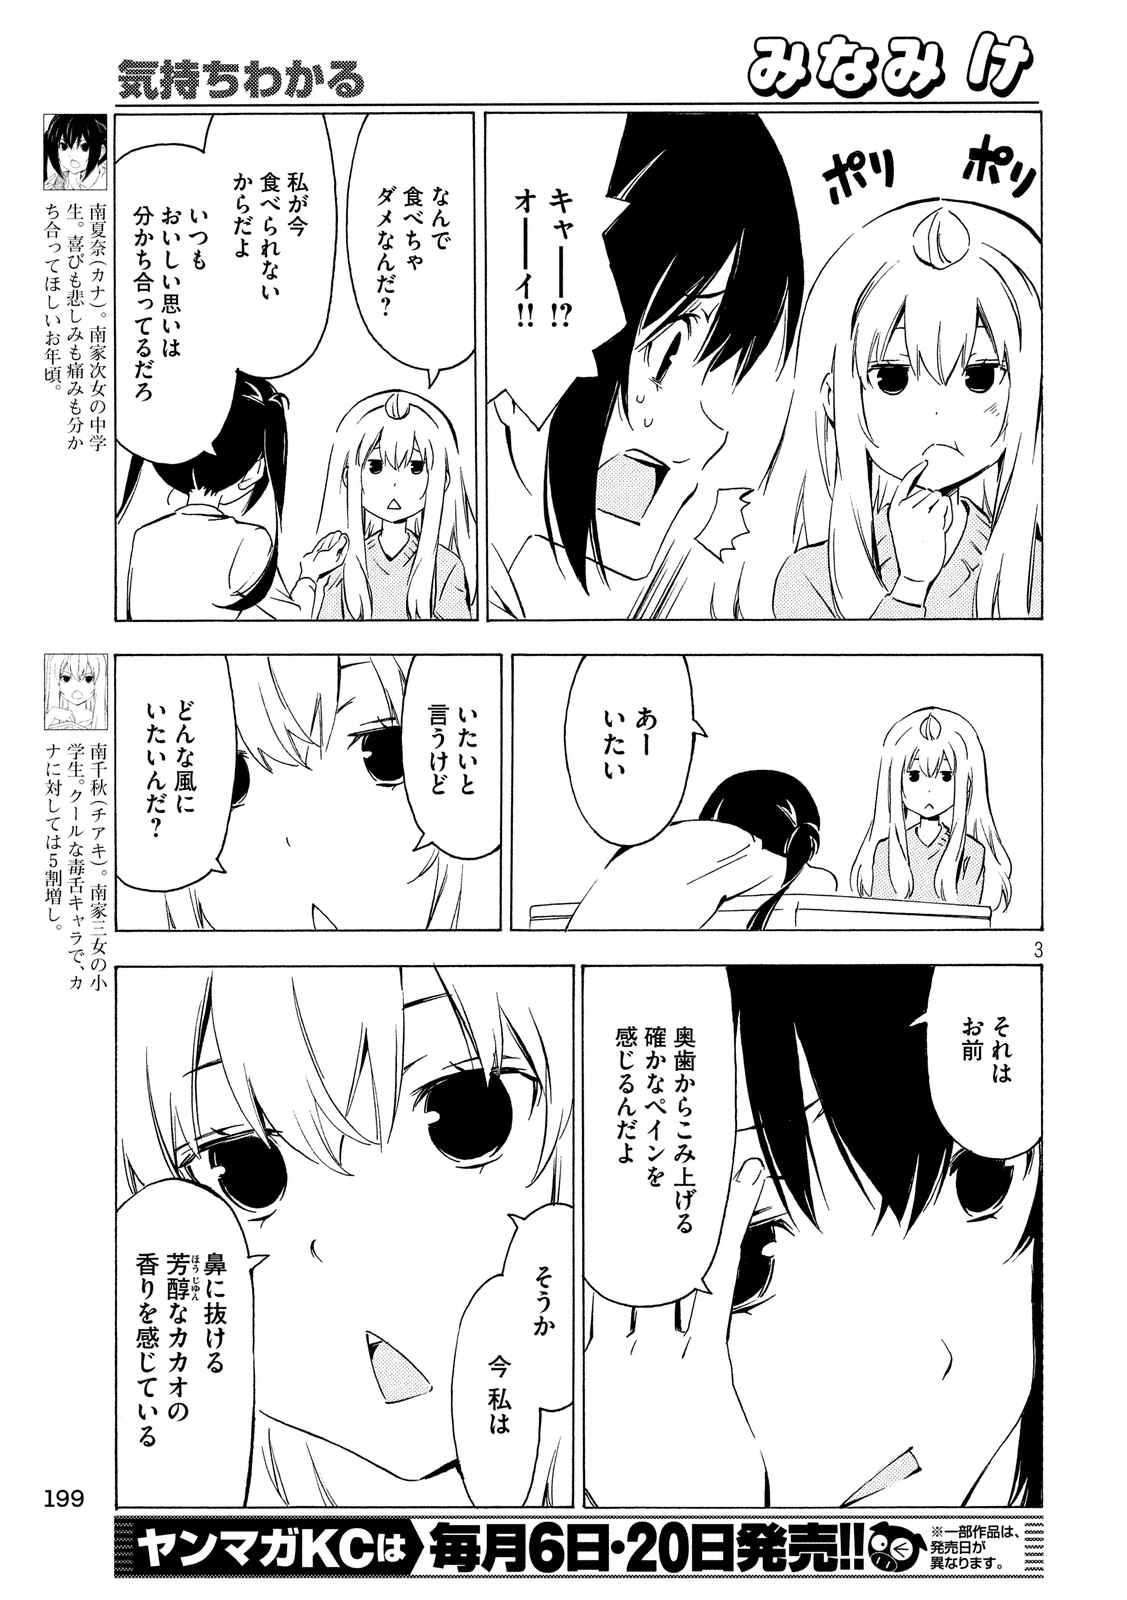 Minami-ke - Chapter 311 - Page 3